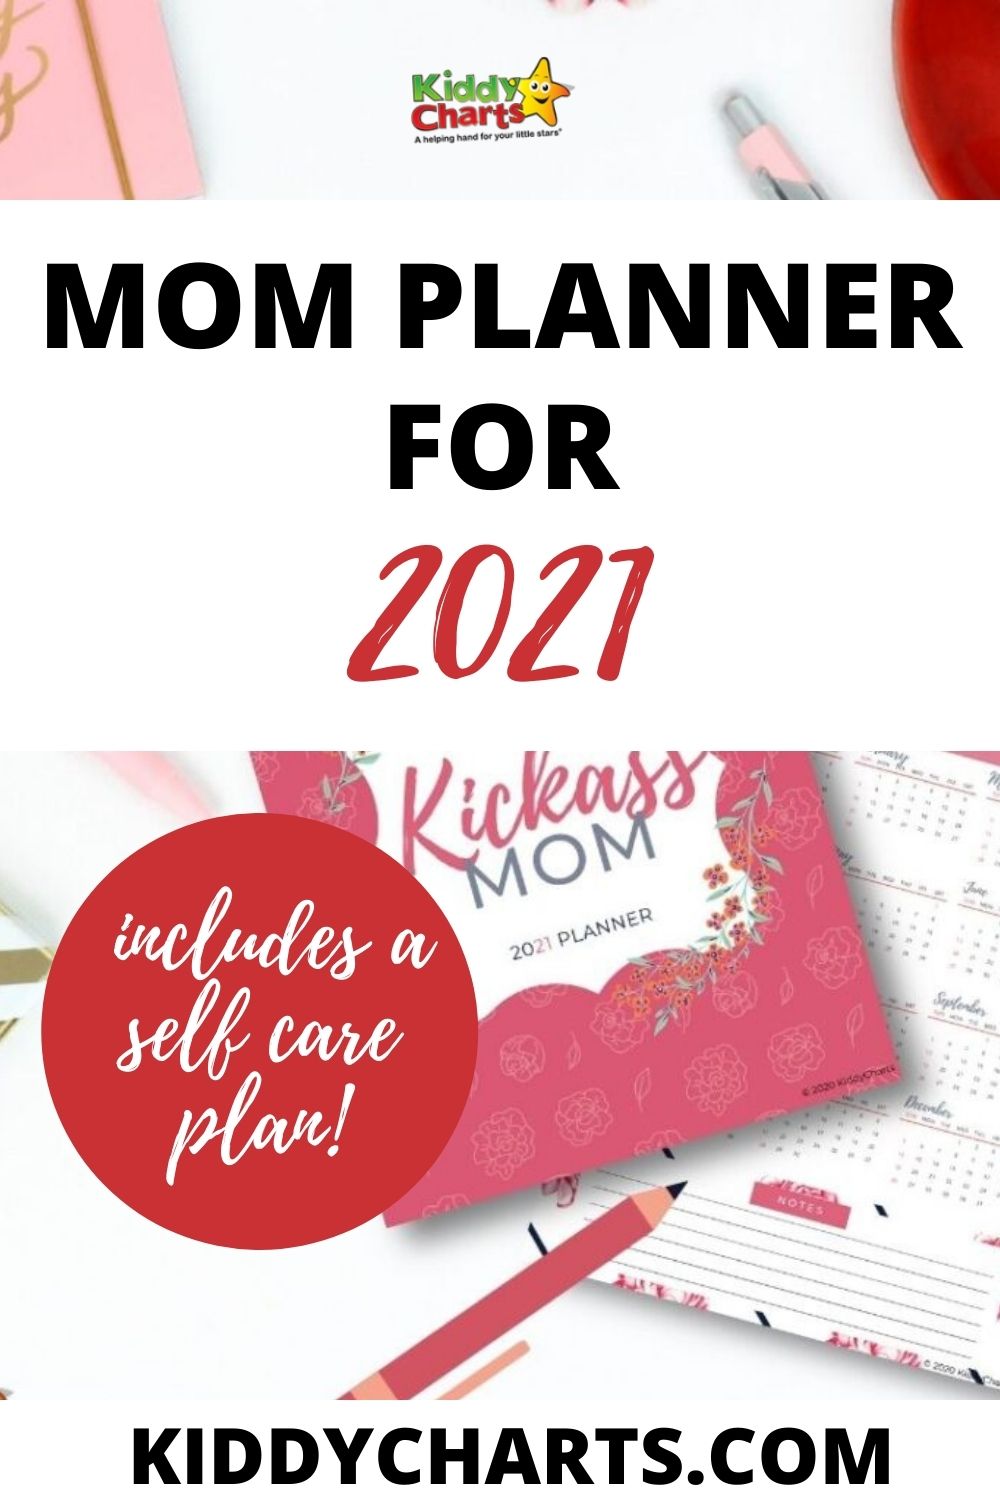 Mom Planner Including Self Care Plan